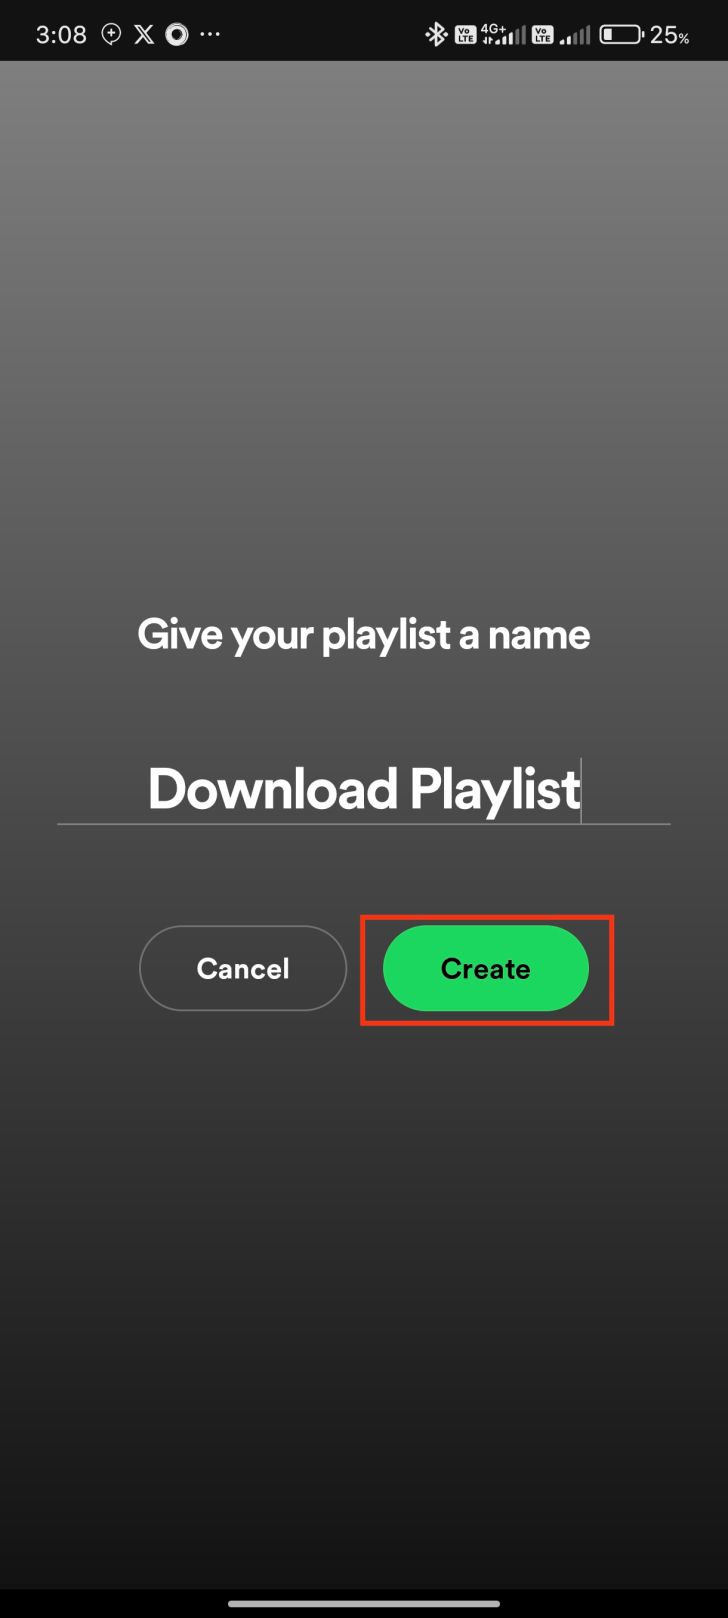 Create a playlist